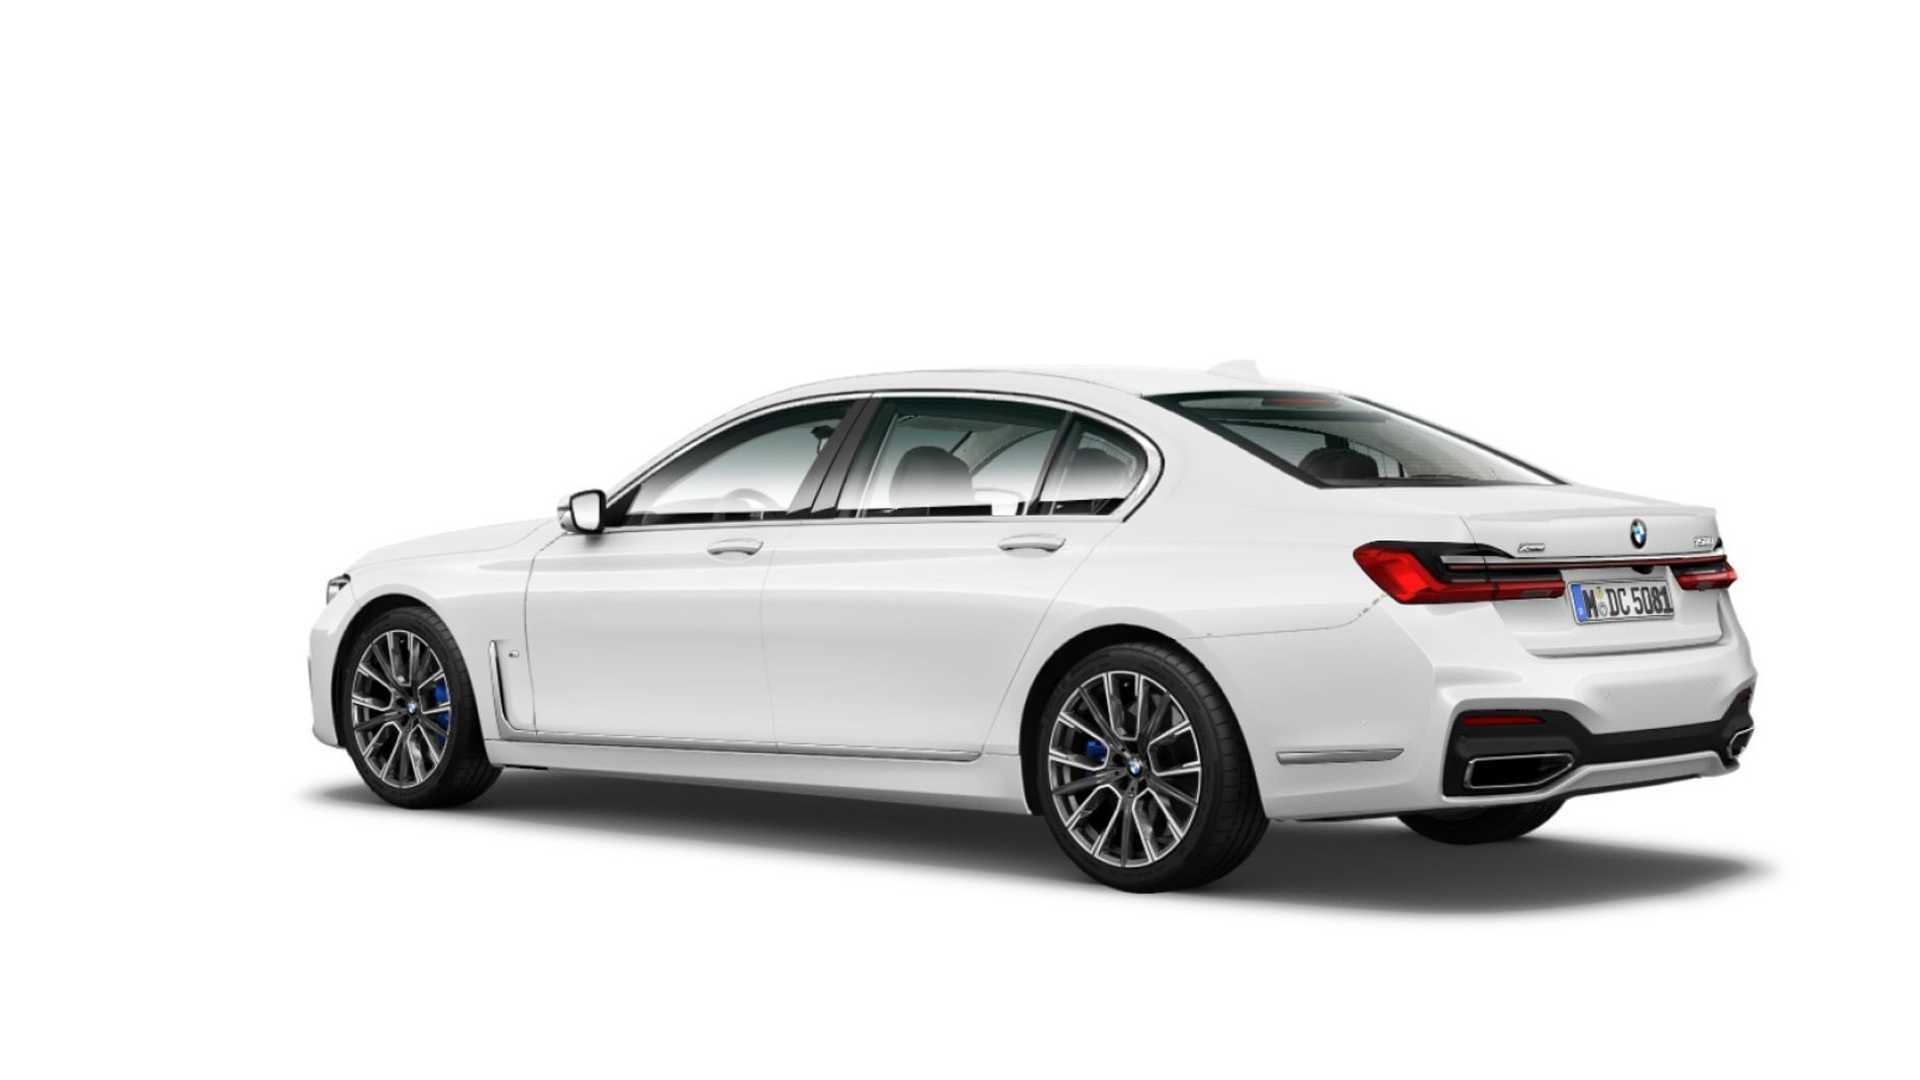 2020 BMW 7-Series leaked - Image via BMW Blog